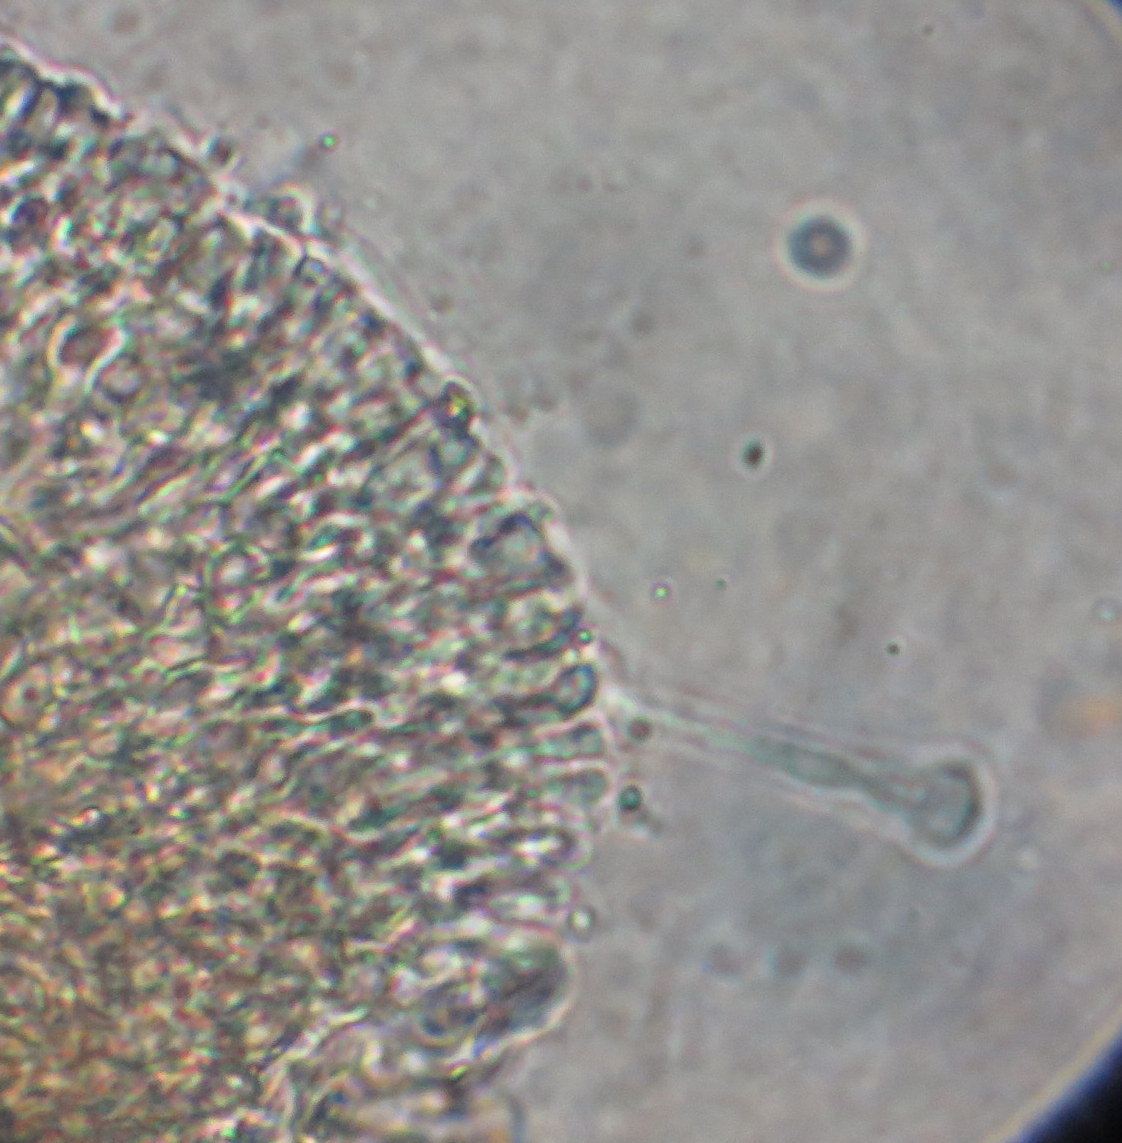 Ophiocordyceps image